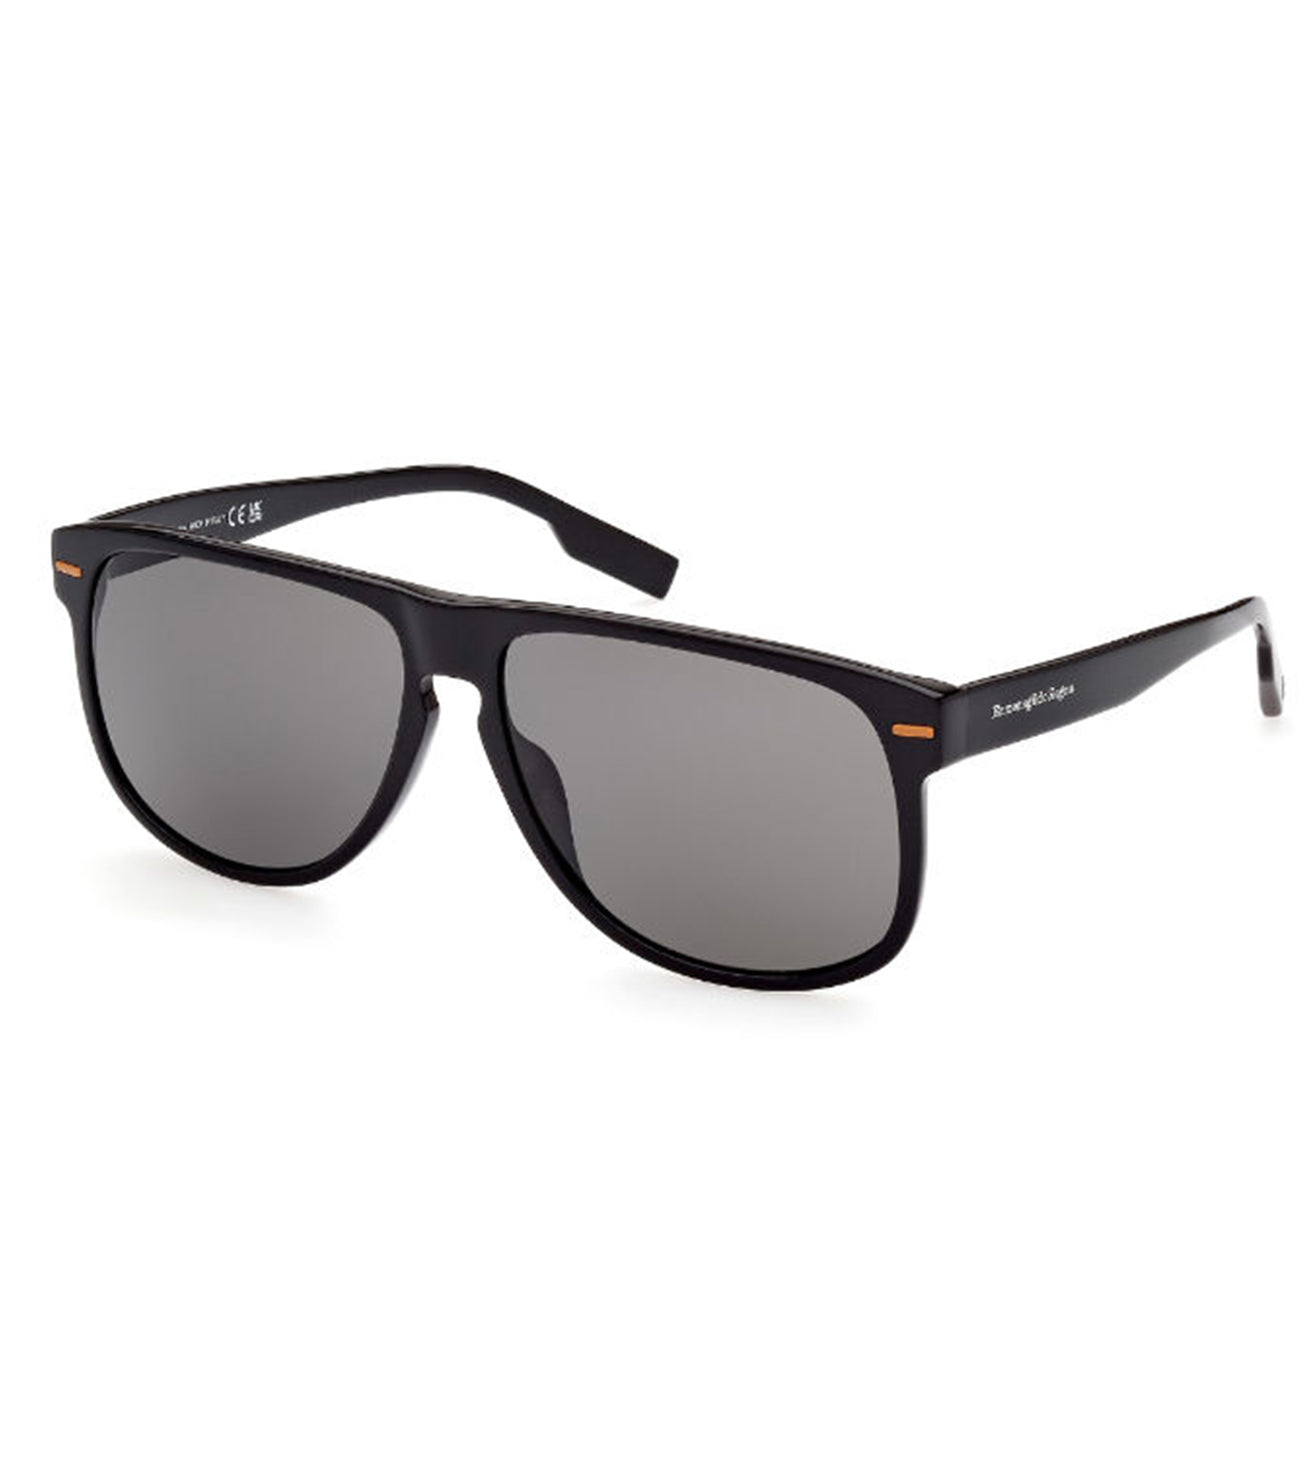 Zegna Men's Smoke Wayfarer Sunglasses